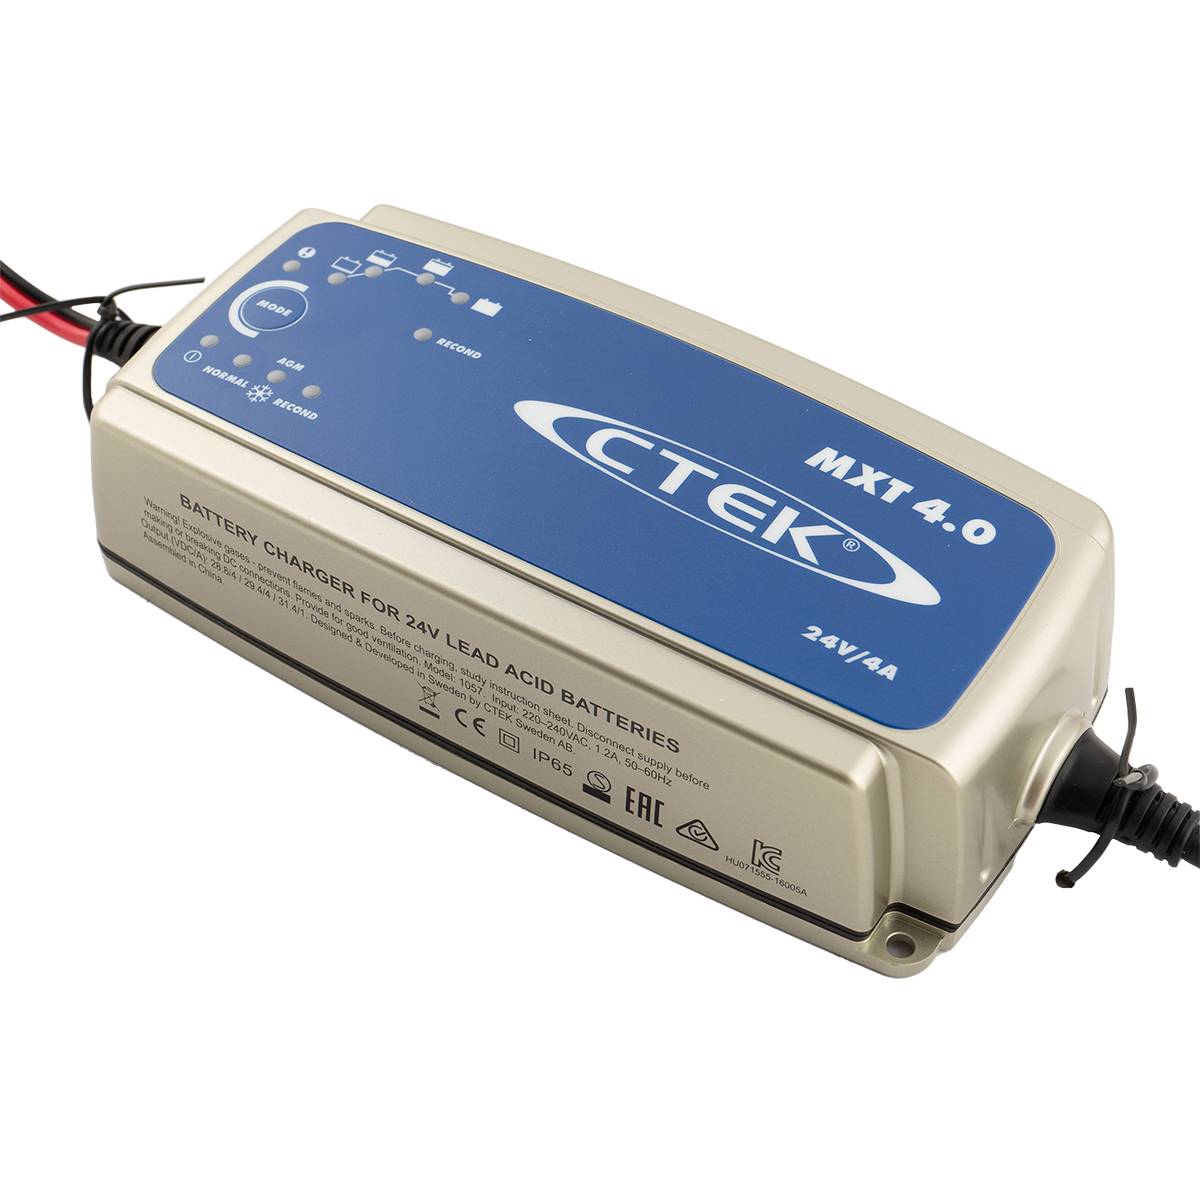 CTEK MXT 4.0 EU LKW Batterie Ladegerät 24V 4A